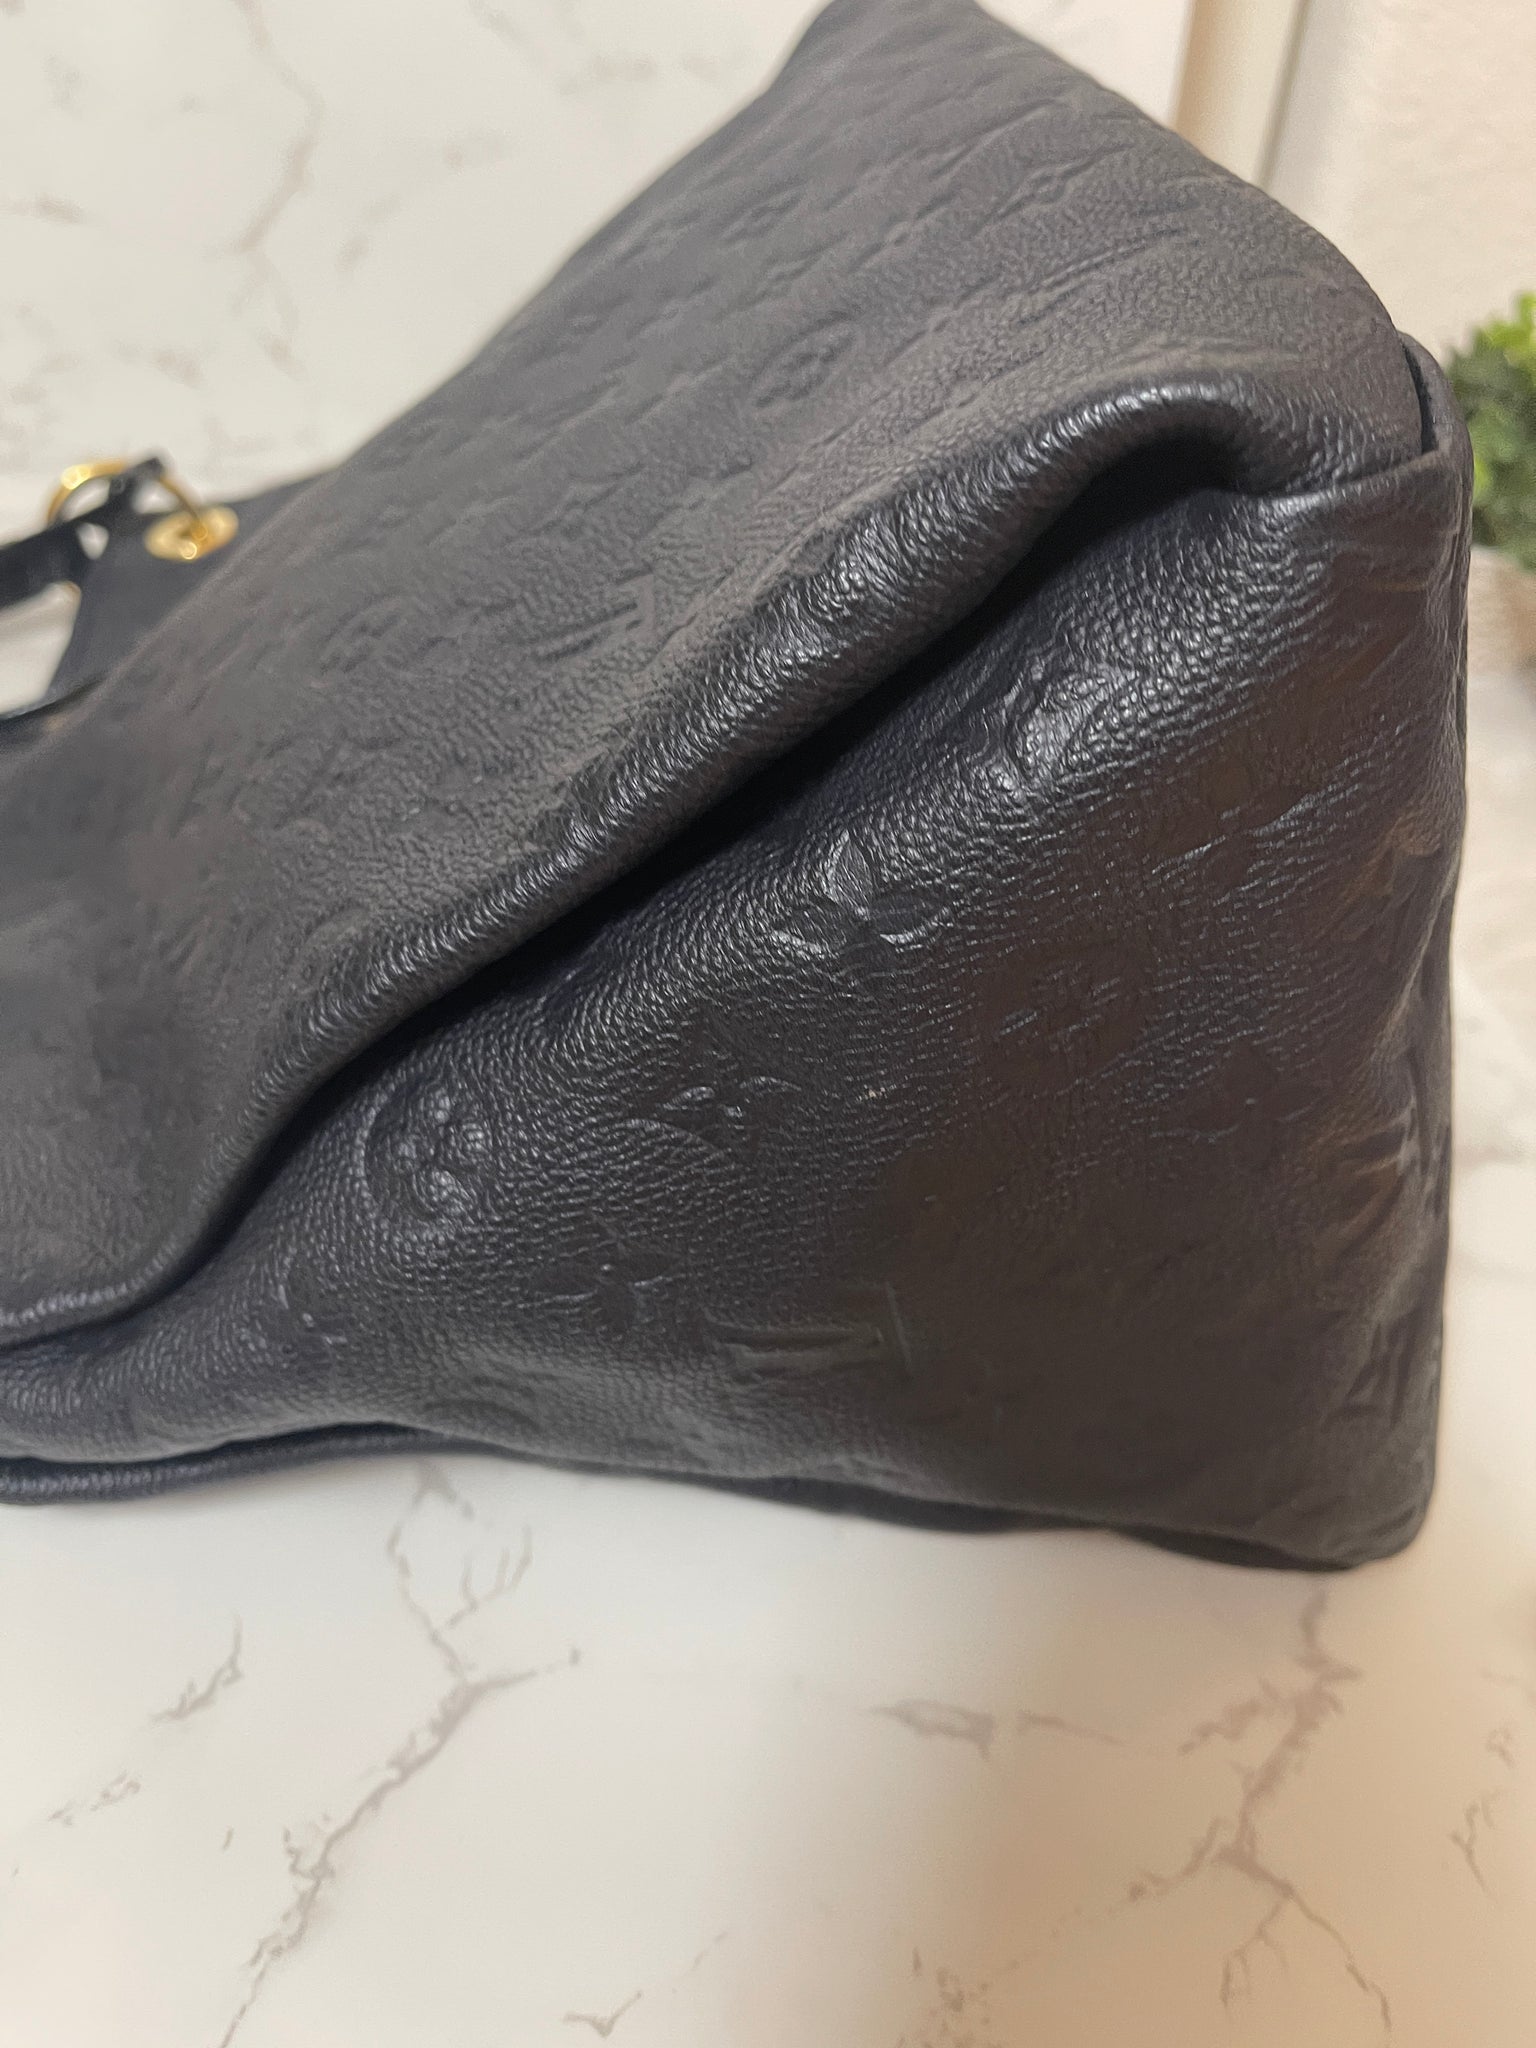 Louis Vuitton, Bags, Black Noir Louis Vuitton Empreinte Artsy Bag